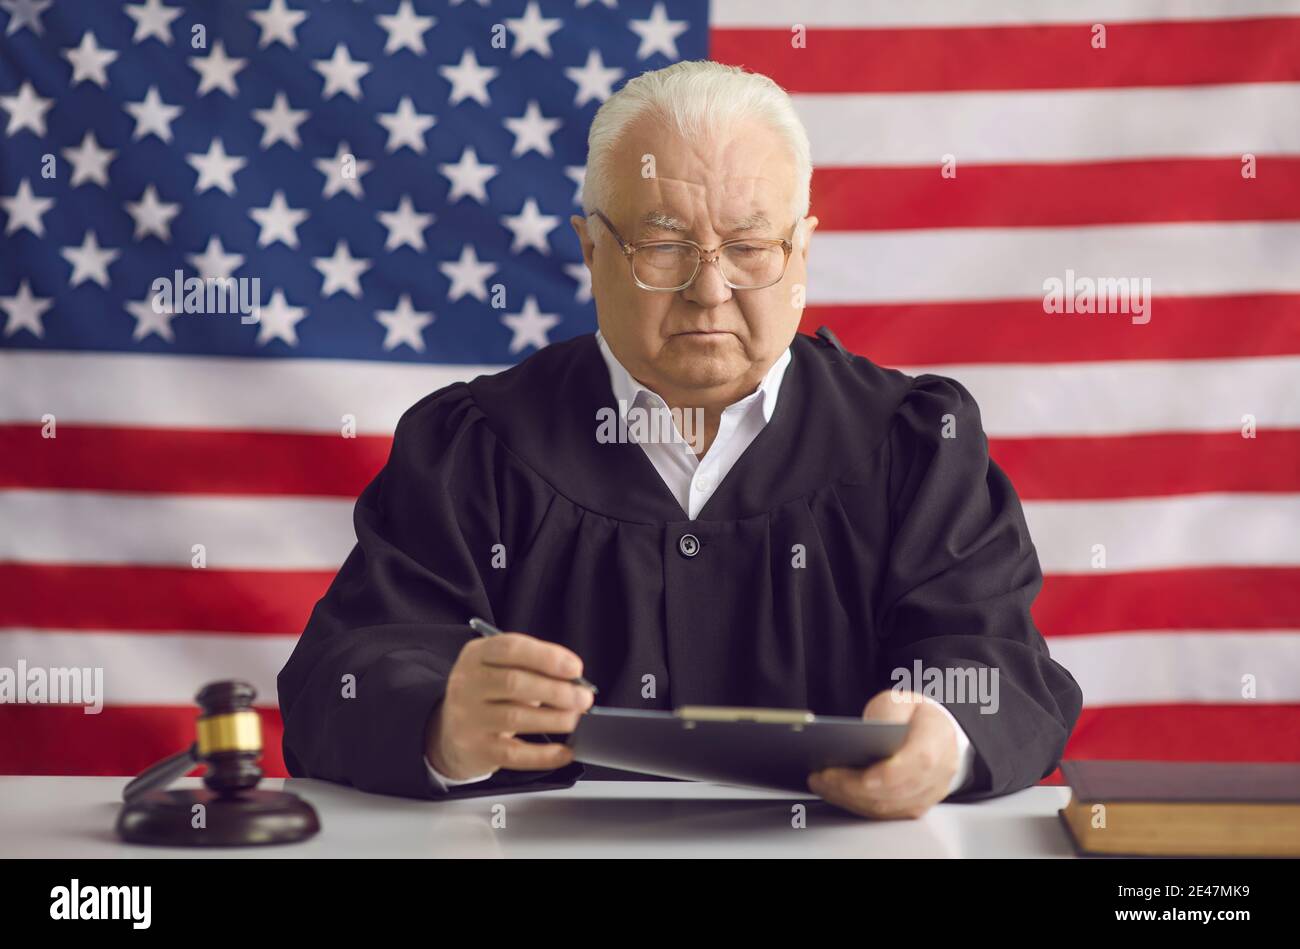 Senior man professional judge signing verdict papers over american flag Stock Photo